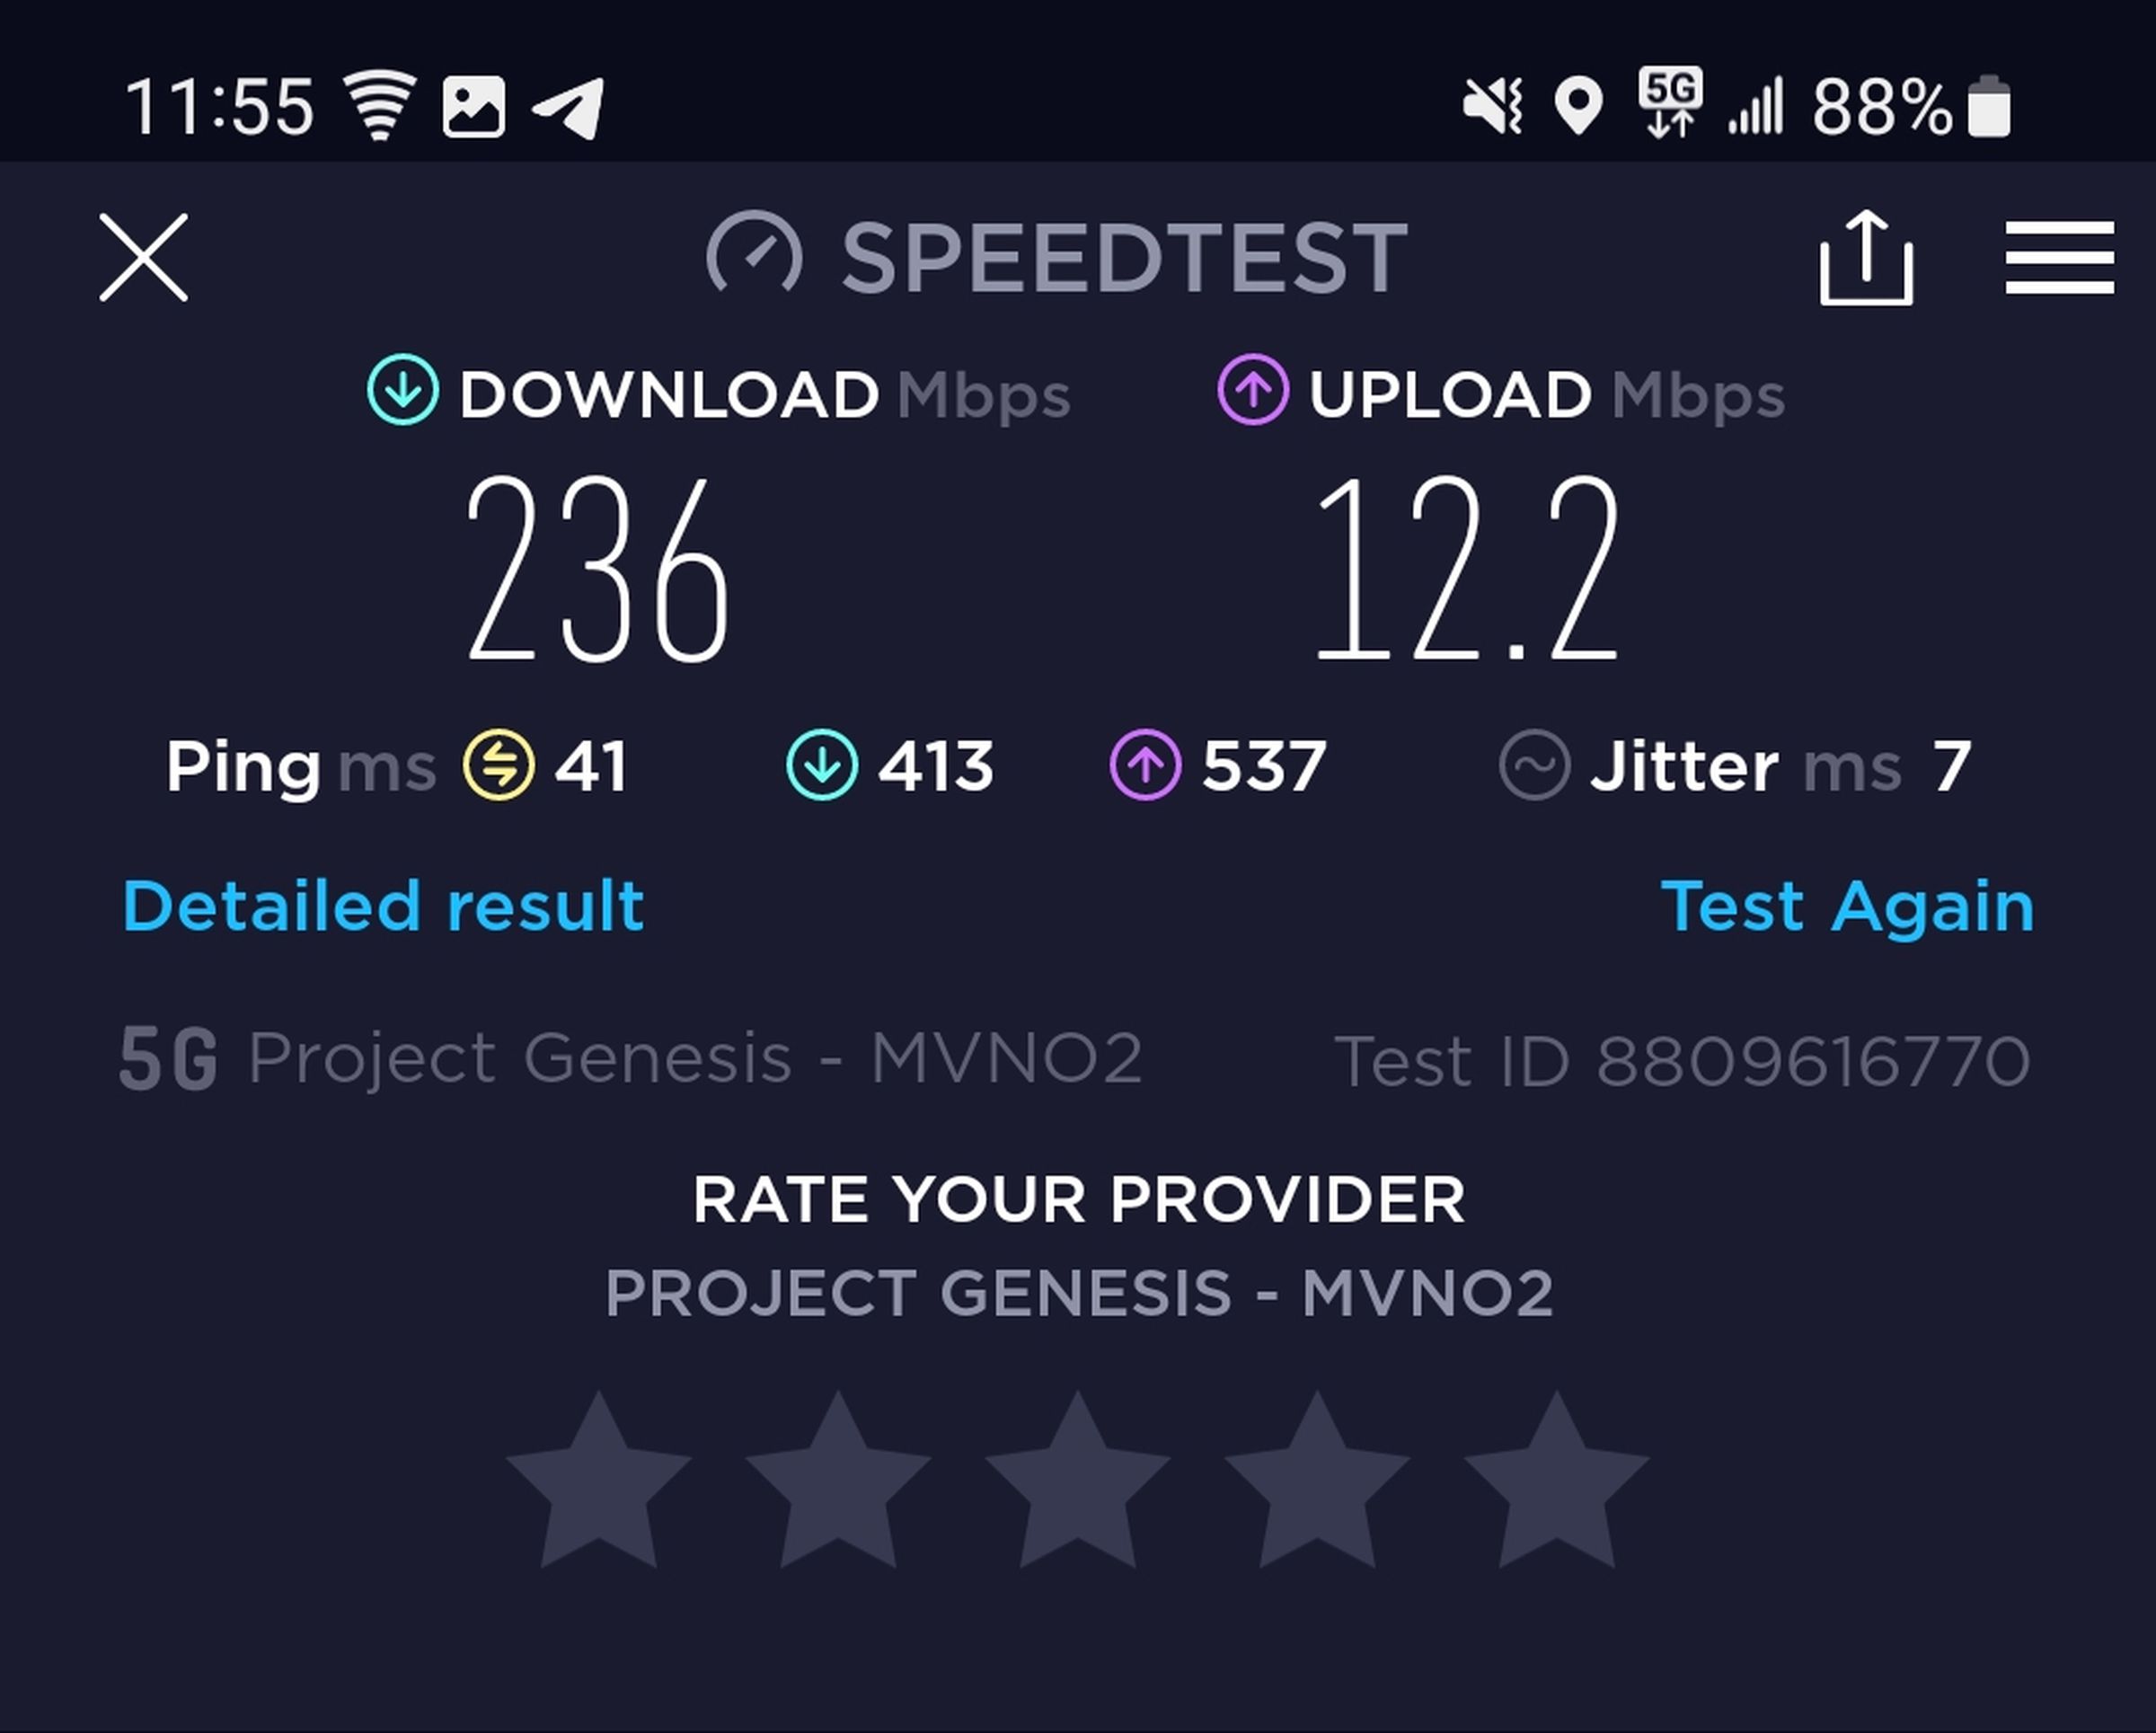 Screenshot of a speedtest result showing a download speed of 236 Mbps, and an upload speed of 12.2 Mbps.